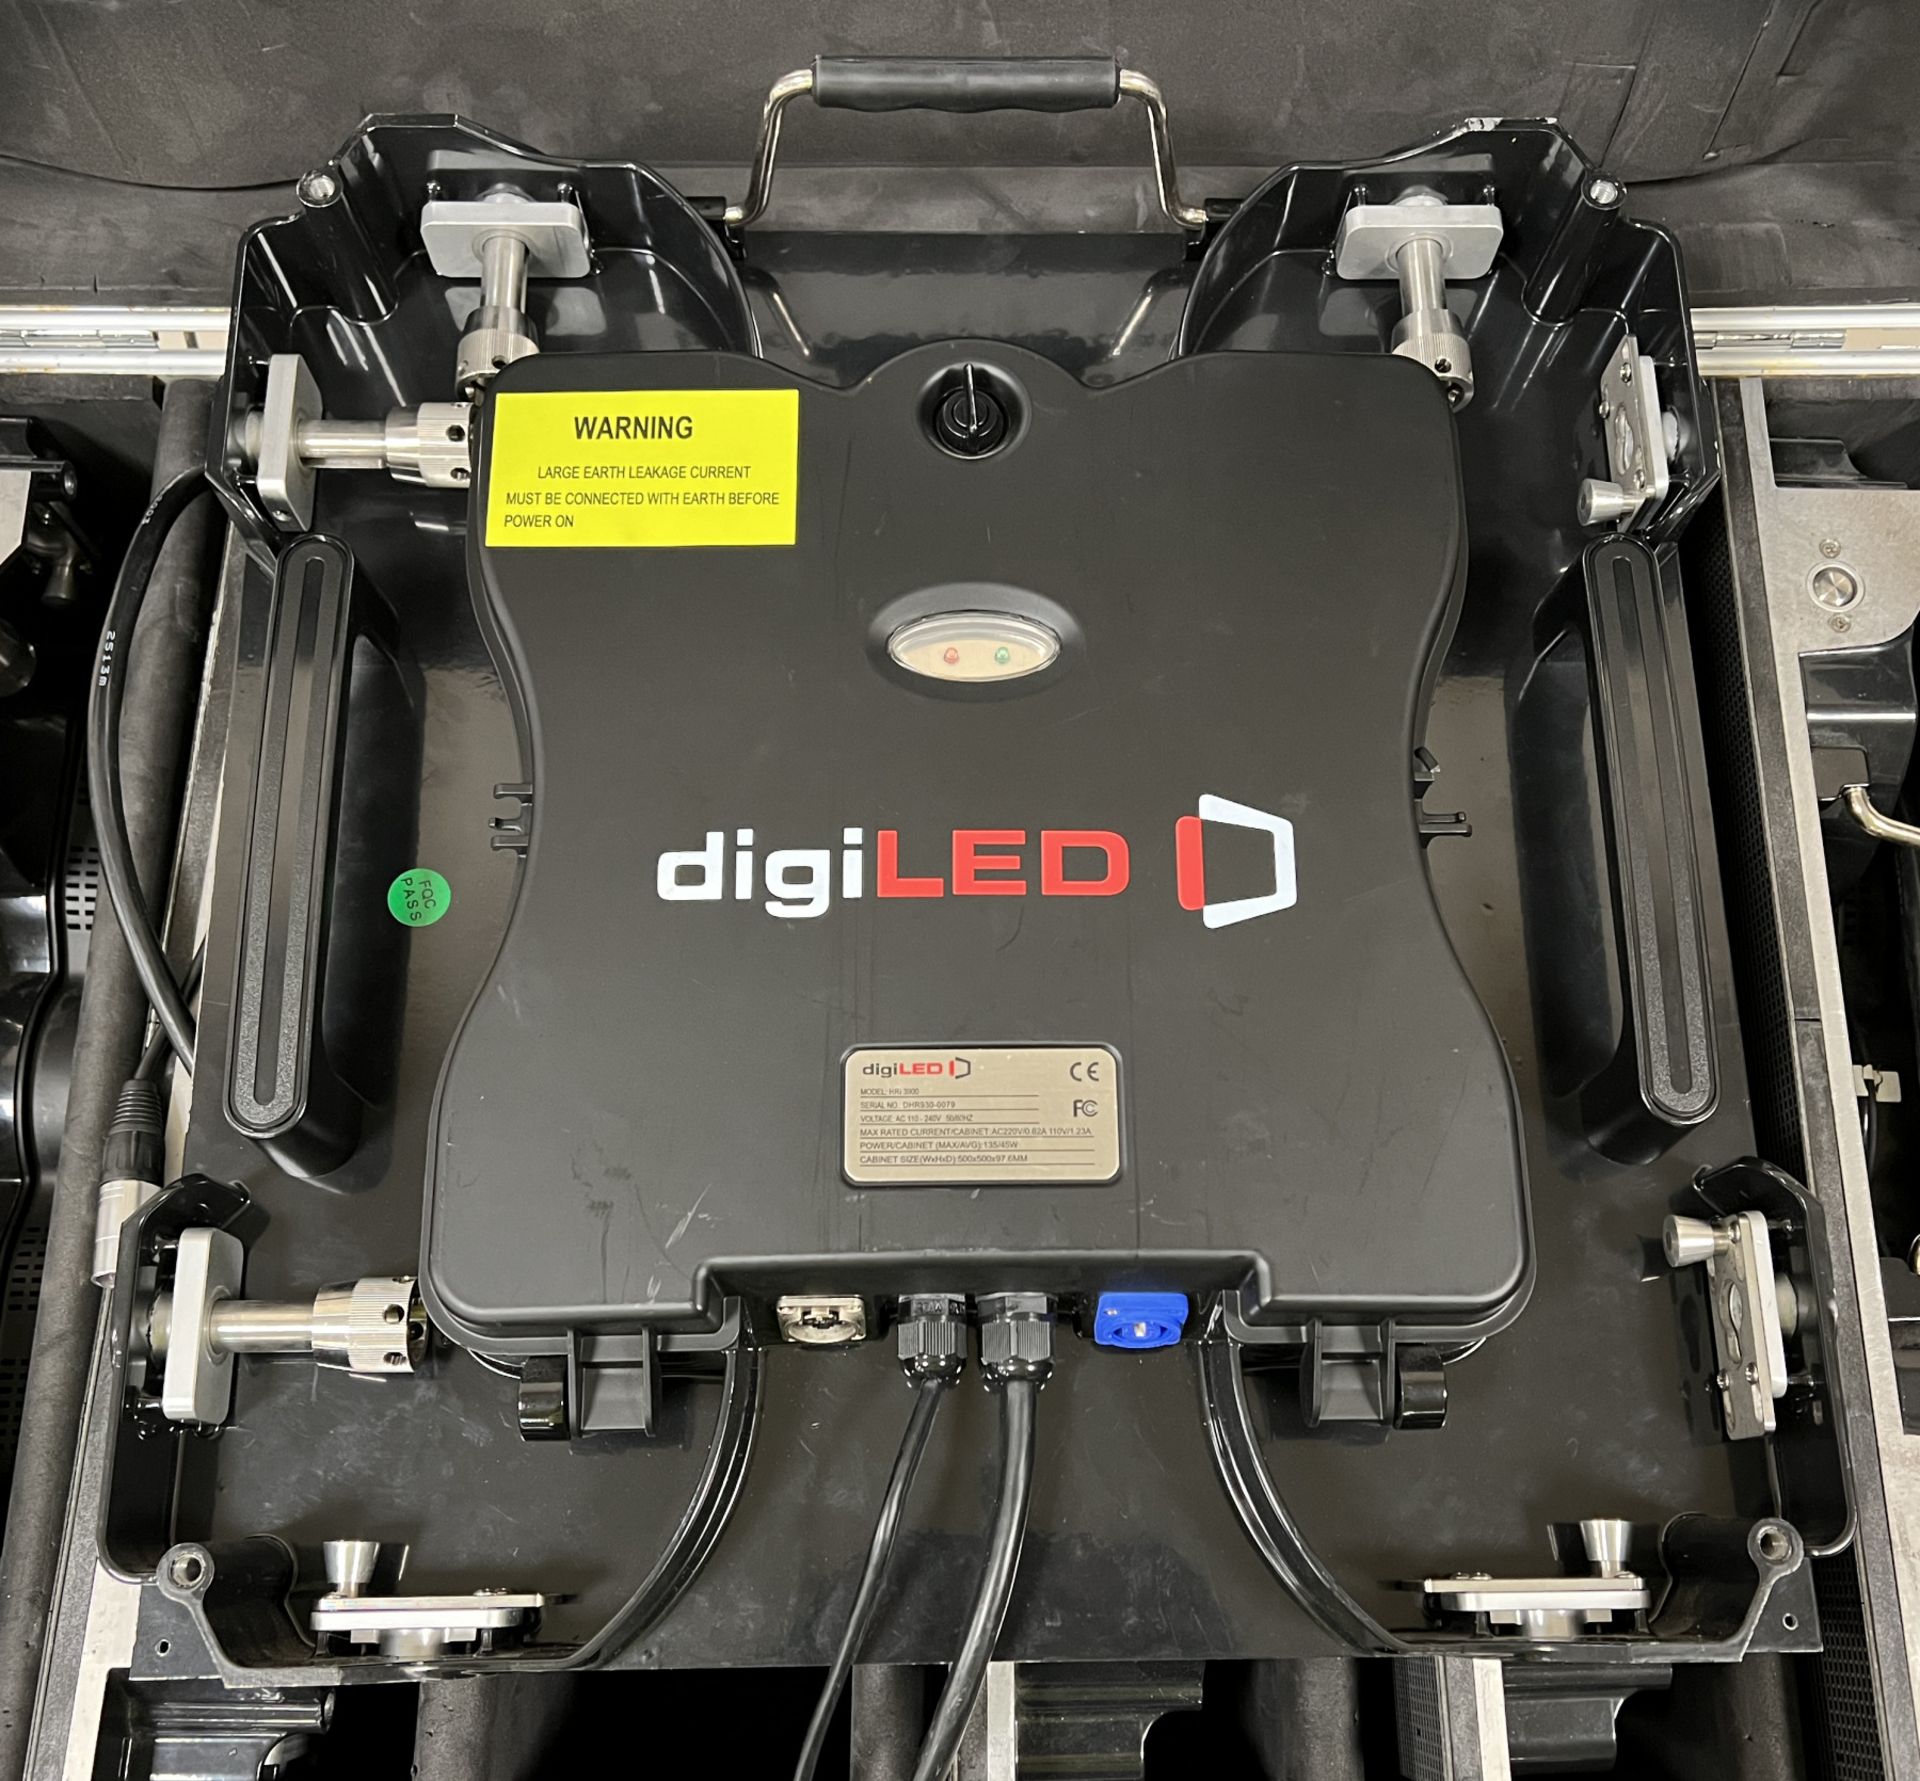 Digi LED HRI3900 kit - 120 LED tiles housed in 20 wheeled flight cases - see description for details - Image 48 of 196